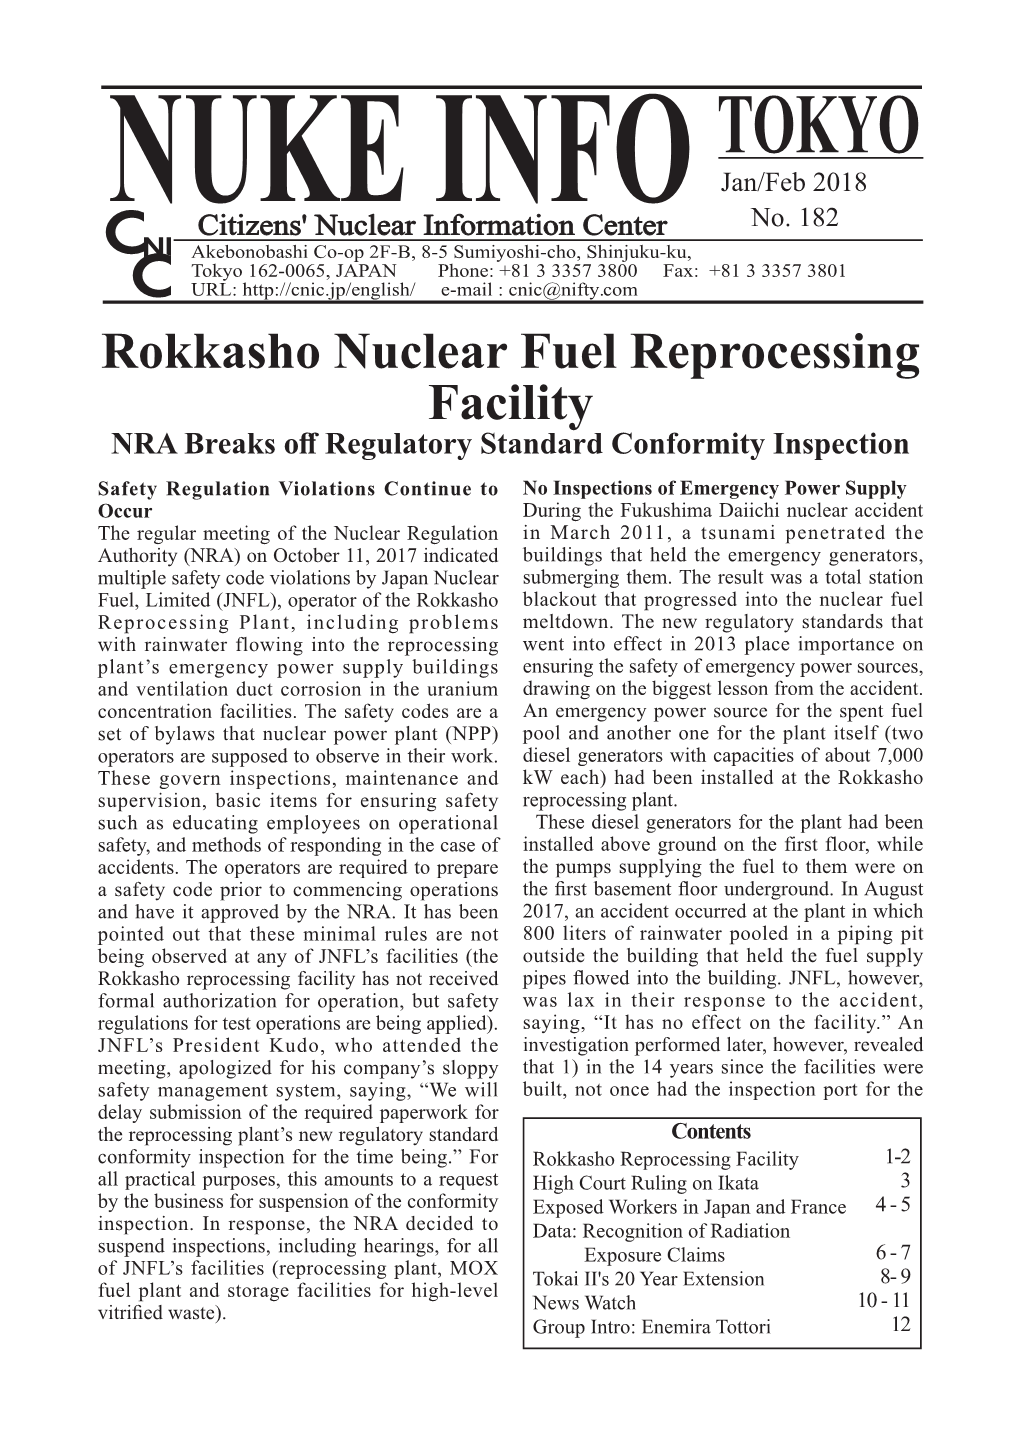 Rokkasho Nuclear Fuel Reprocessing Facility